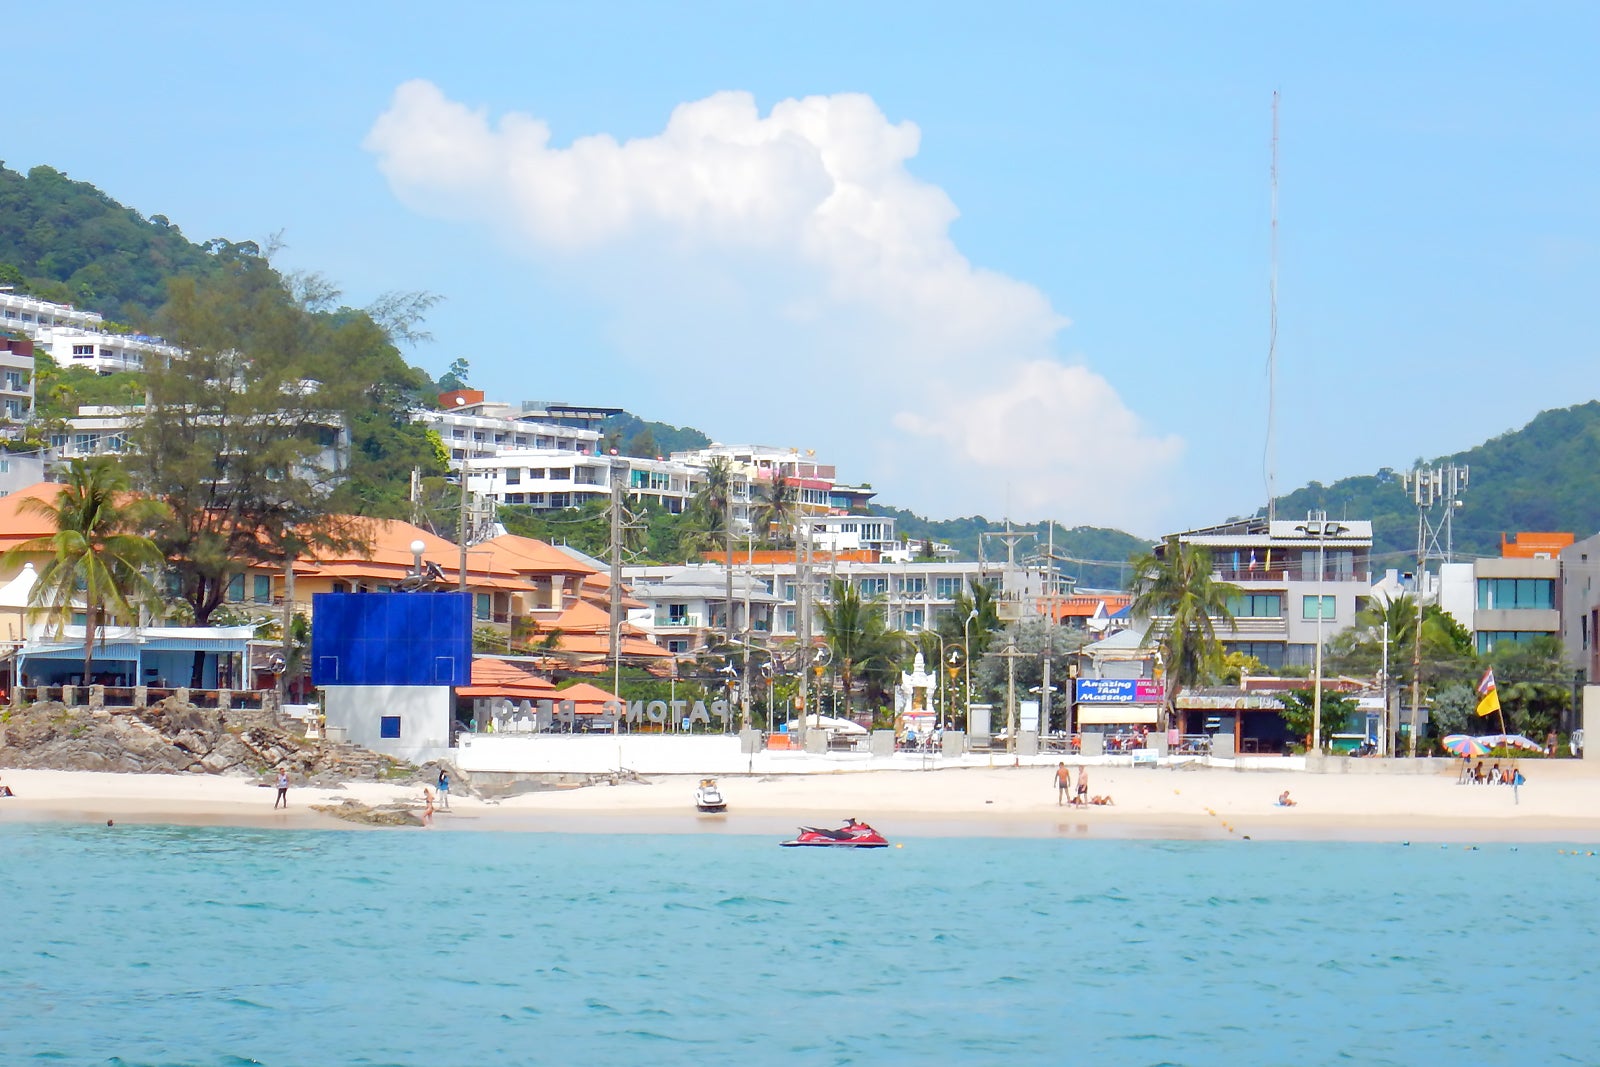 The popular Patong Beach with tourists doing various activities